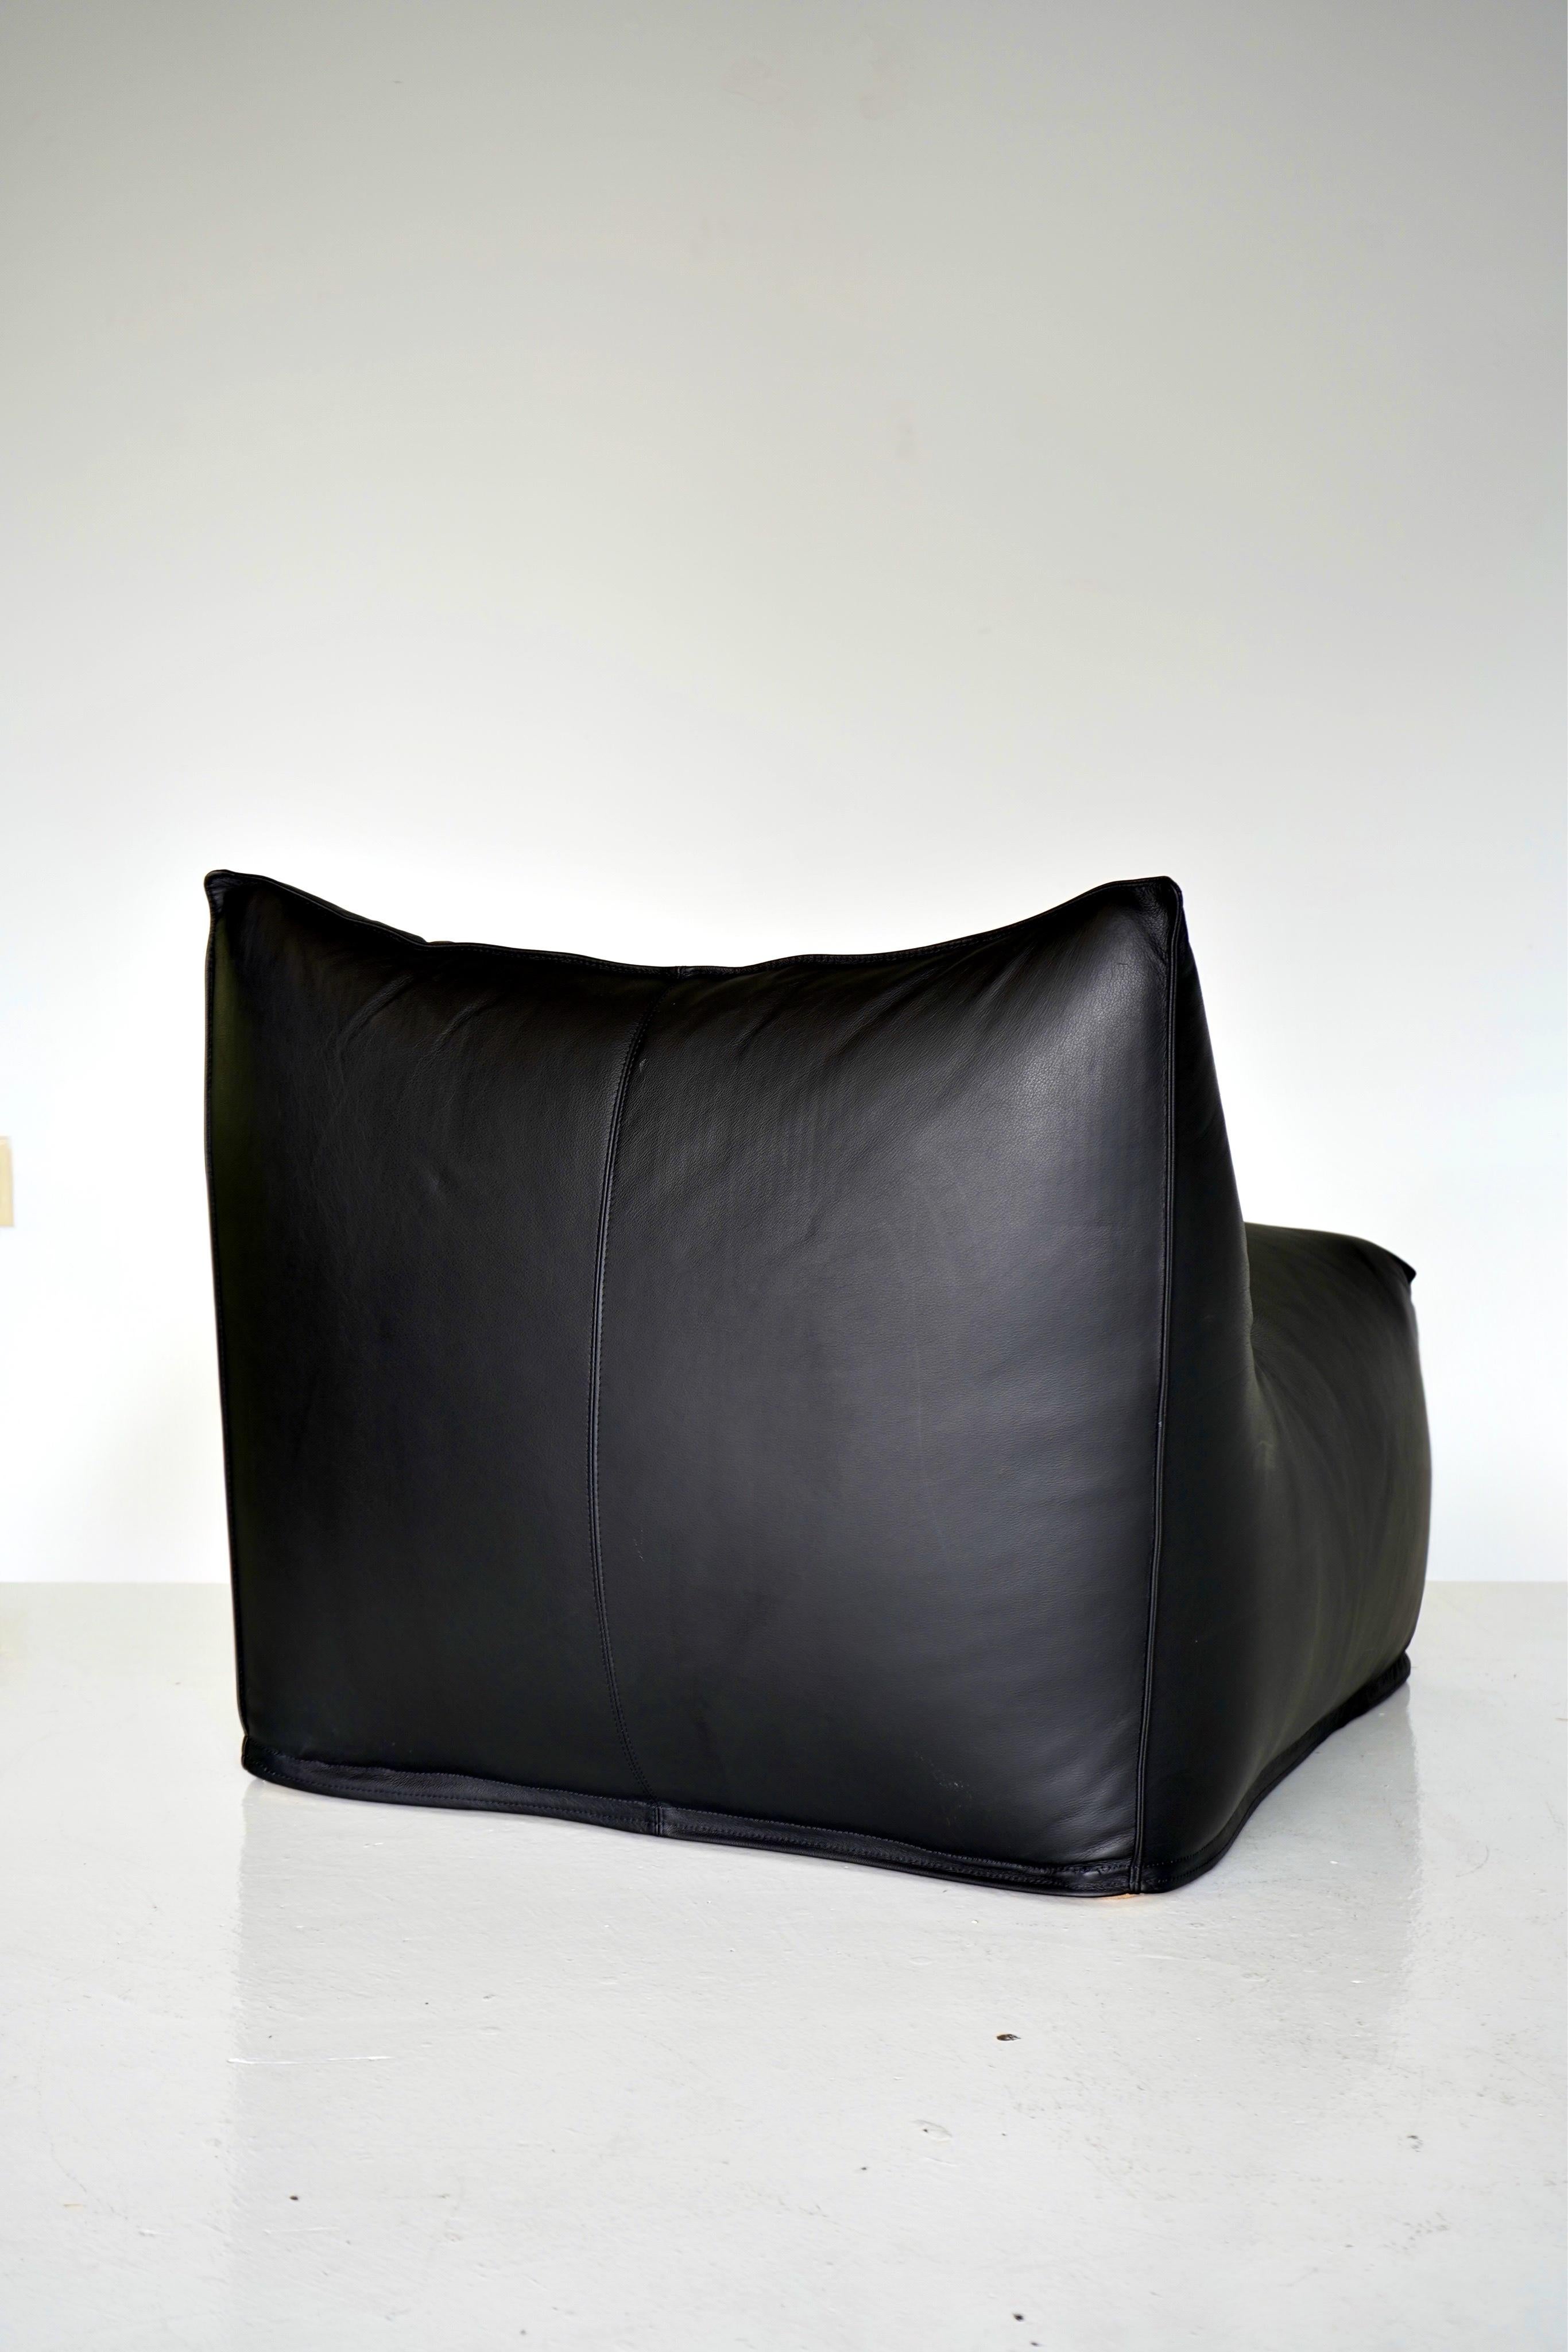 Post-Modern Le Bambole Slipper Chair, Mario Bellini for B&B Italia